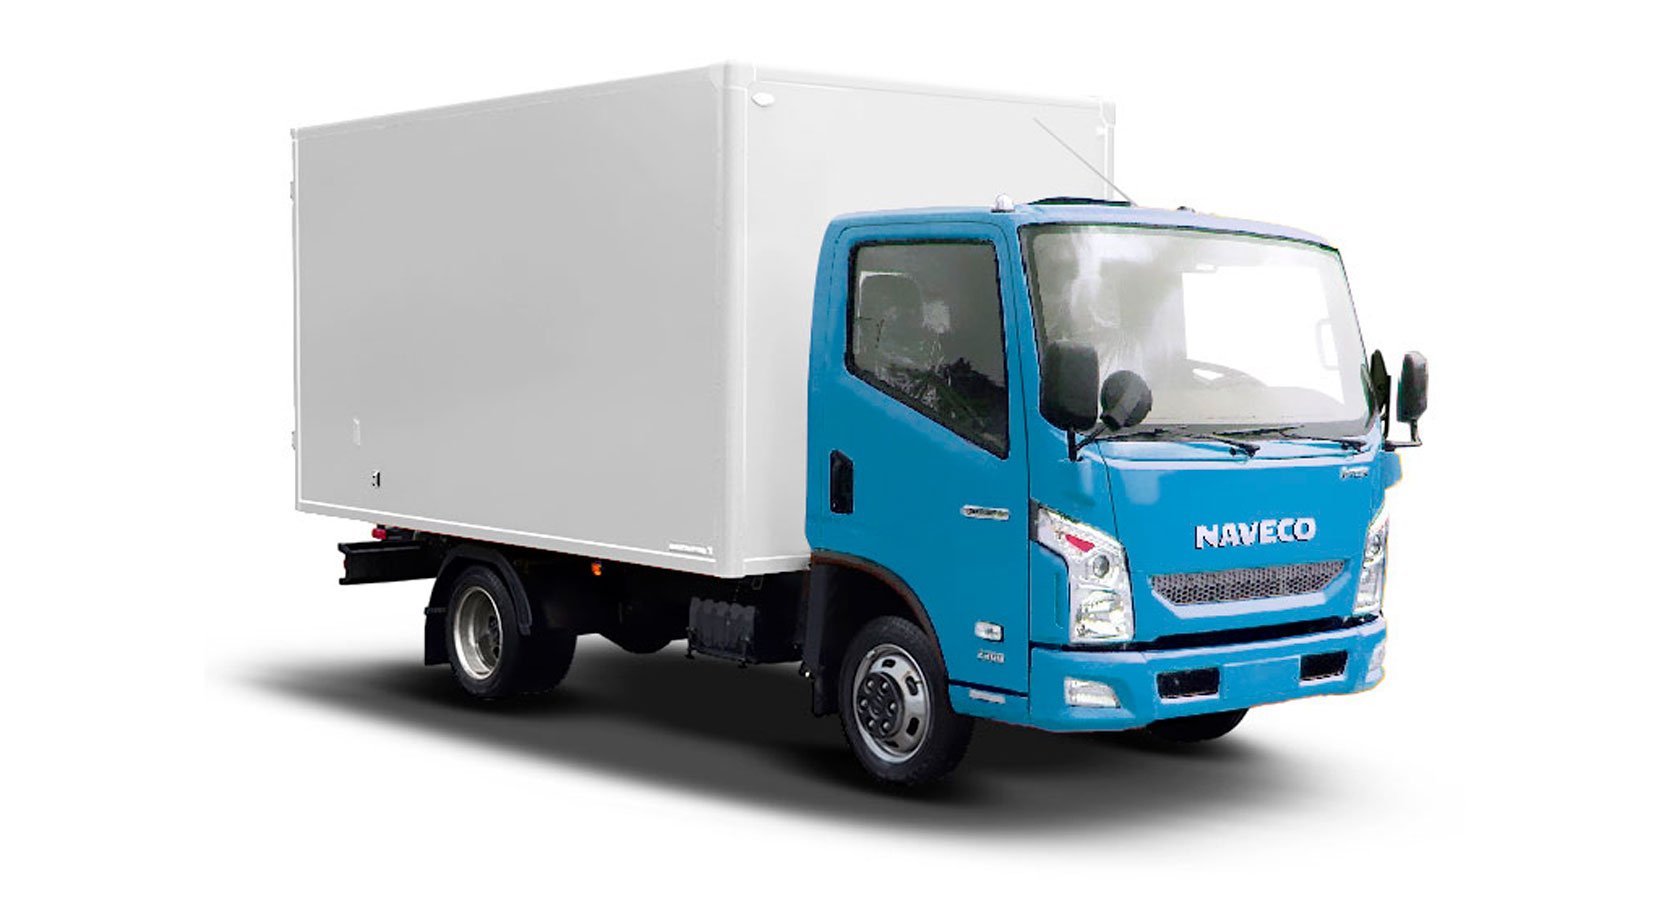 Купить грузовик категории б. Грузовик Naveco c300. Hyundai 72, фургон 3,5т. Фотон бортовой 5 тонн. Грузовик Навеко 3 тонн.